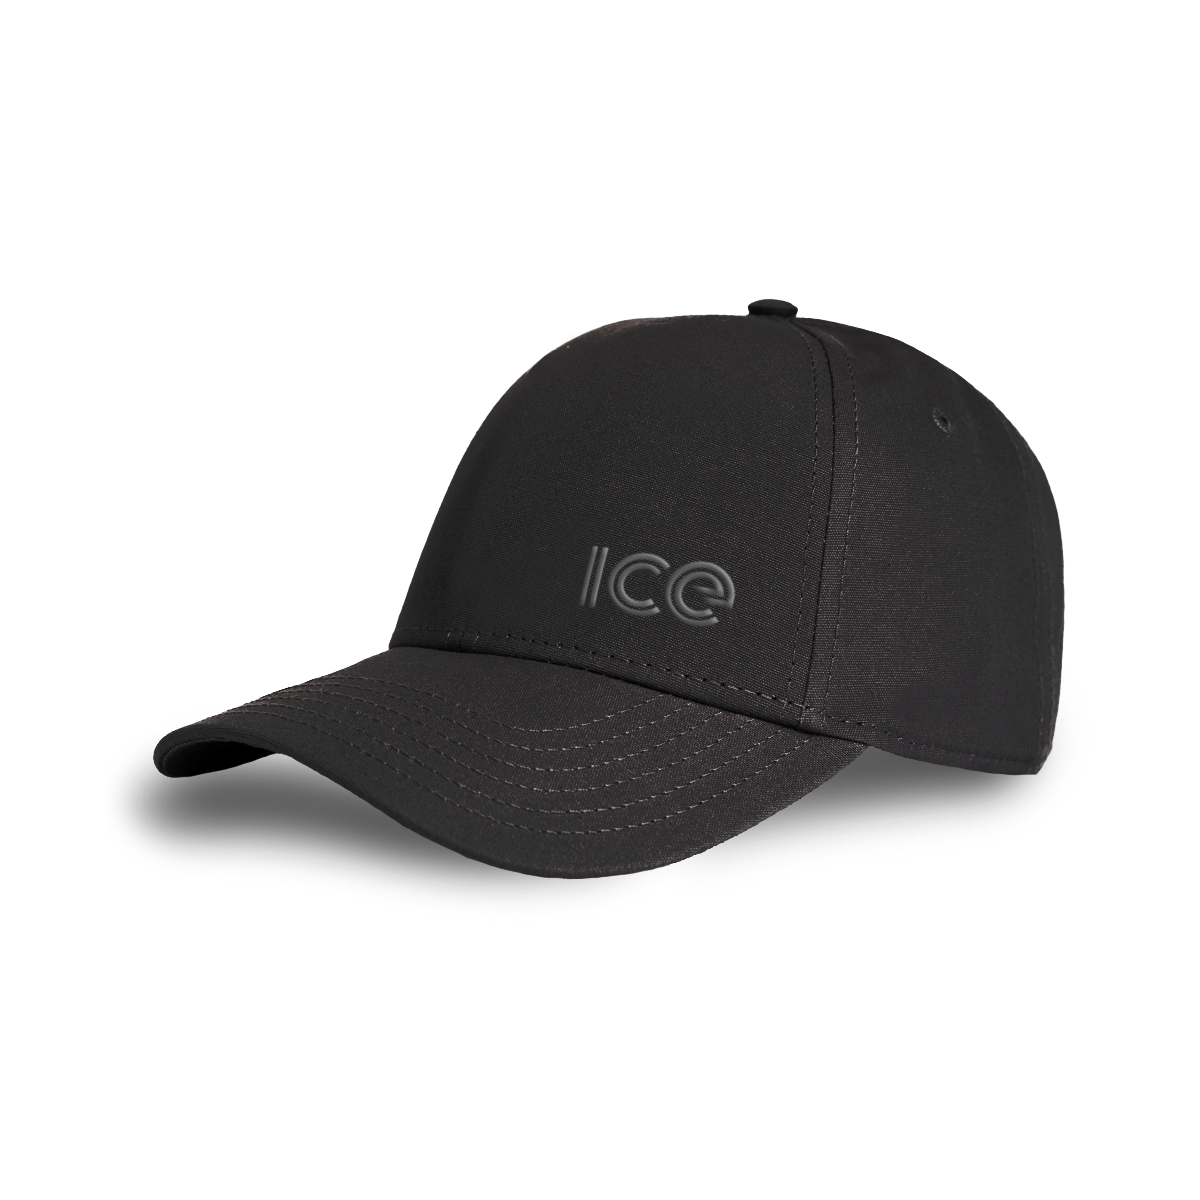 ICE Baseball Cap